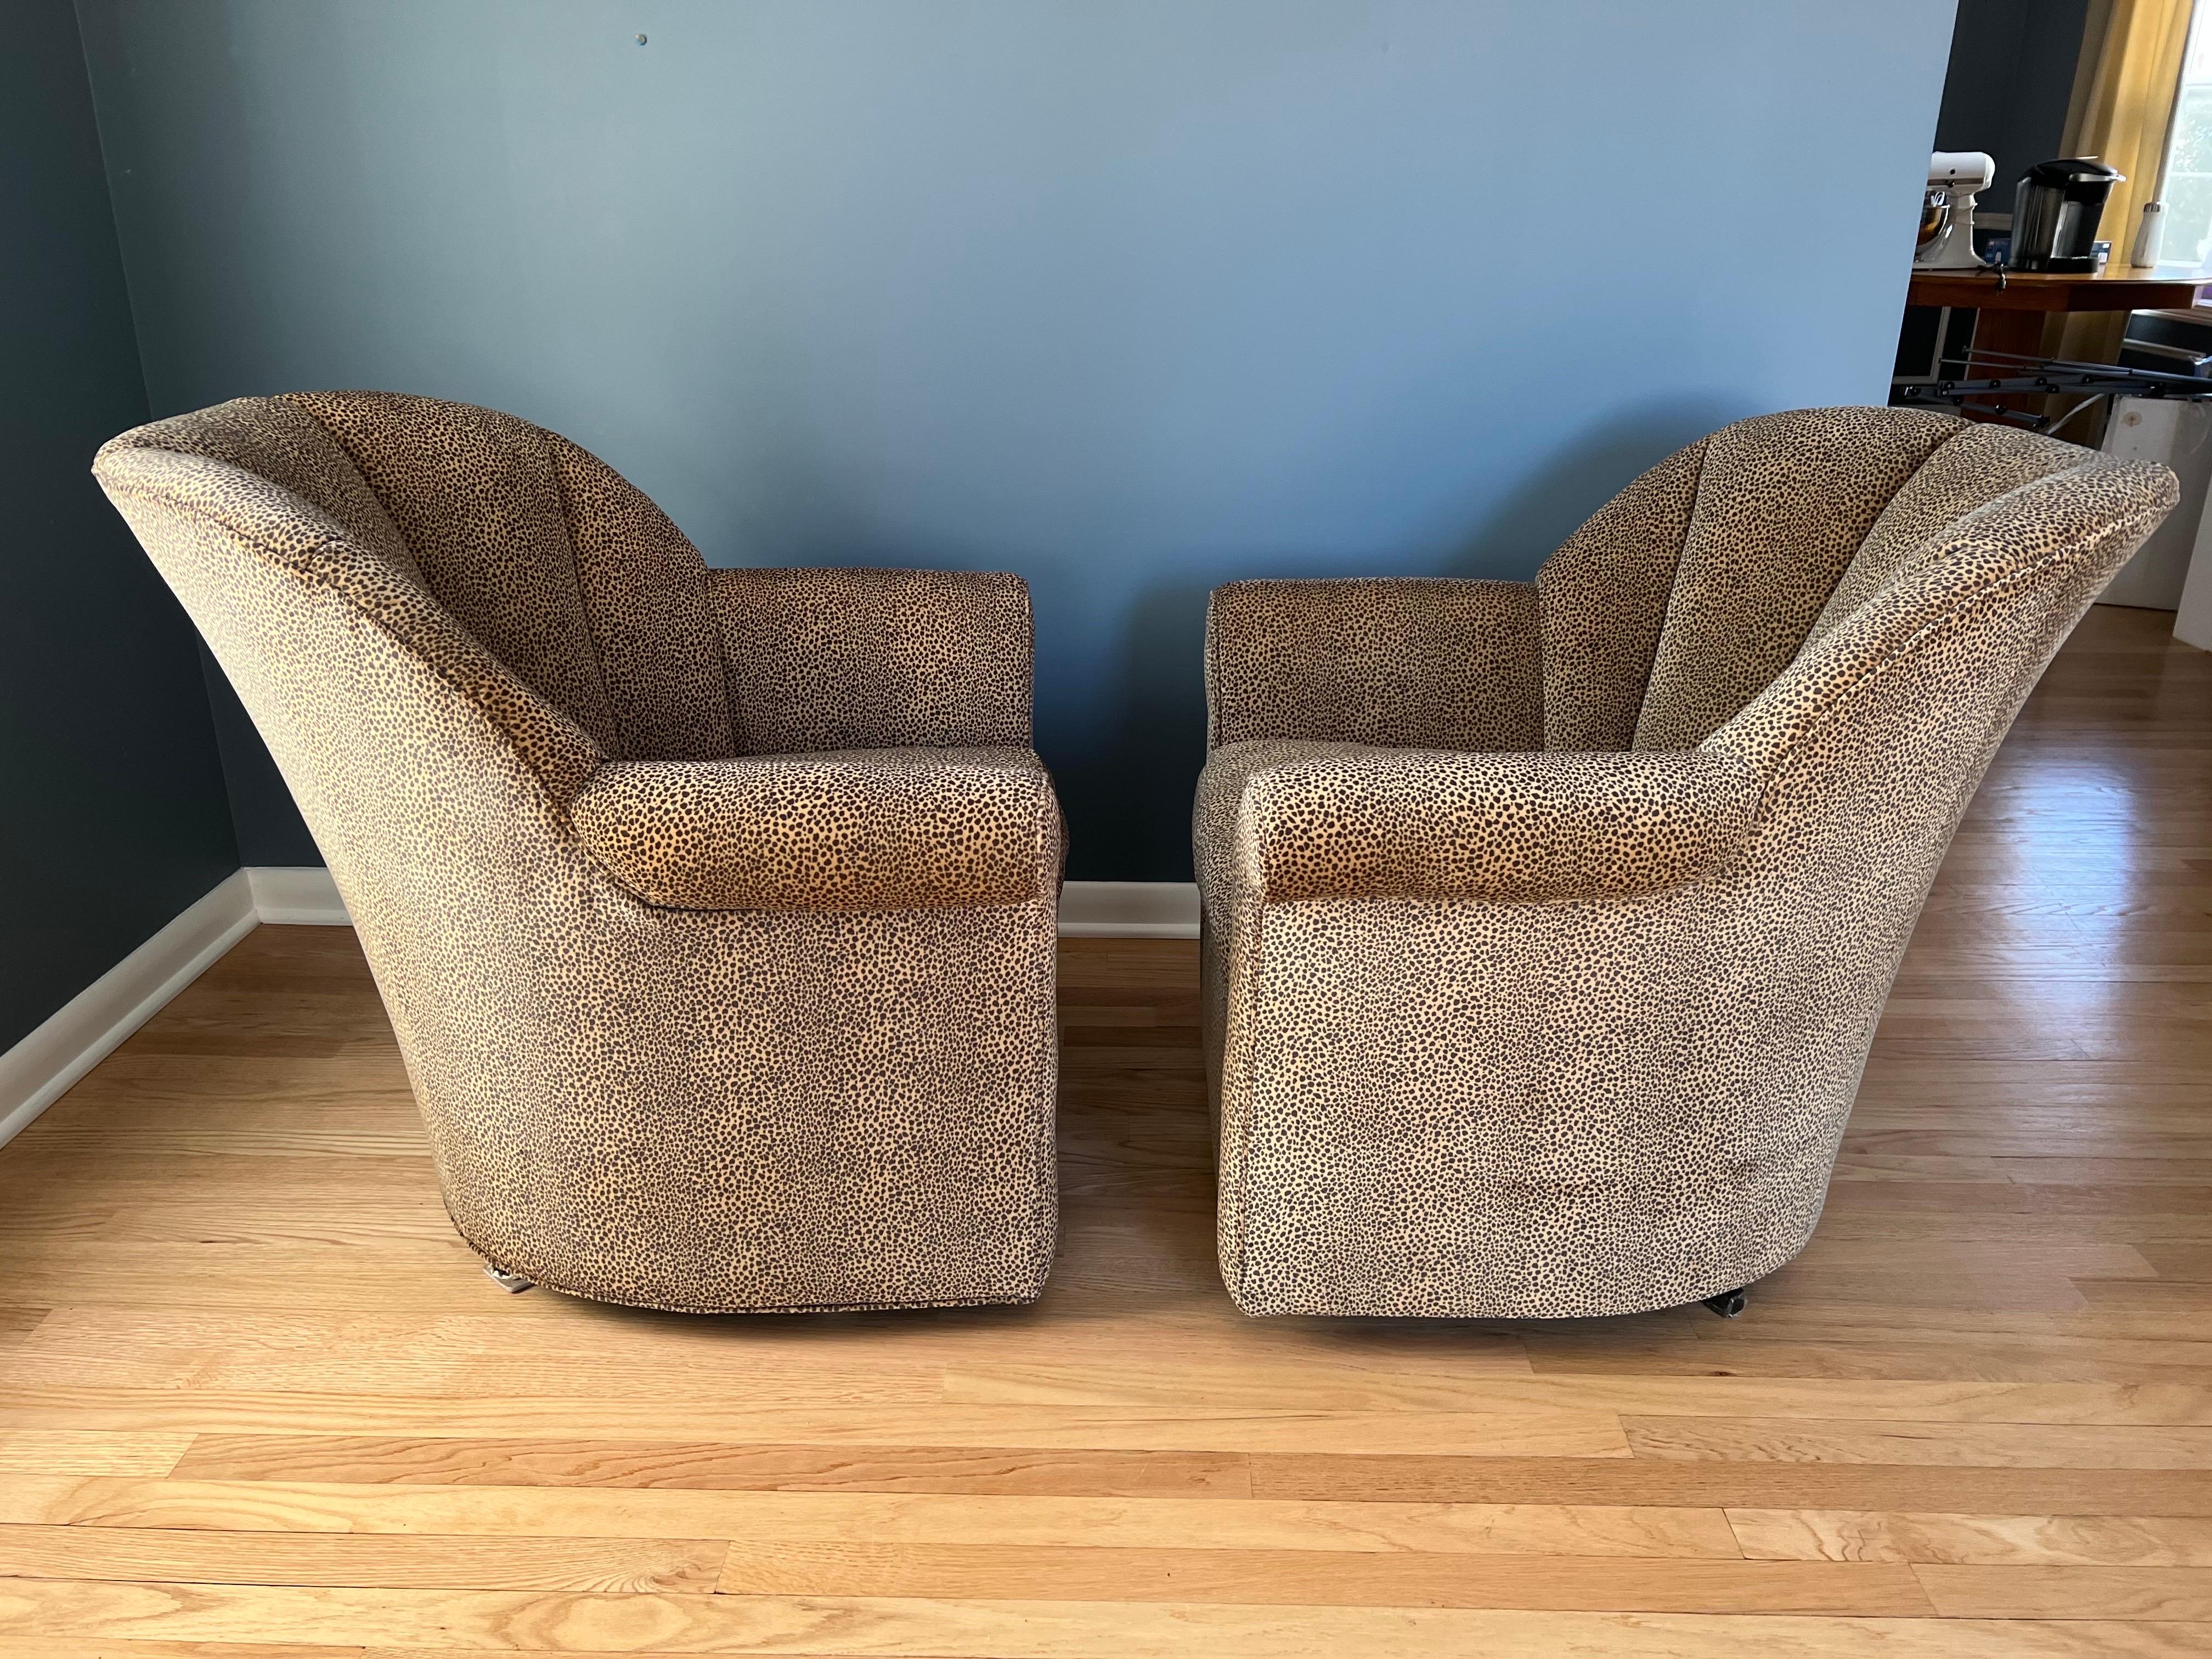 Late 20th Century Pair of Animal Print Swivel Chairs